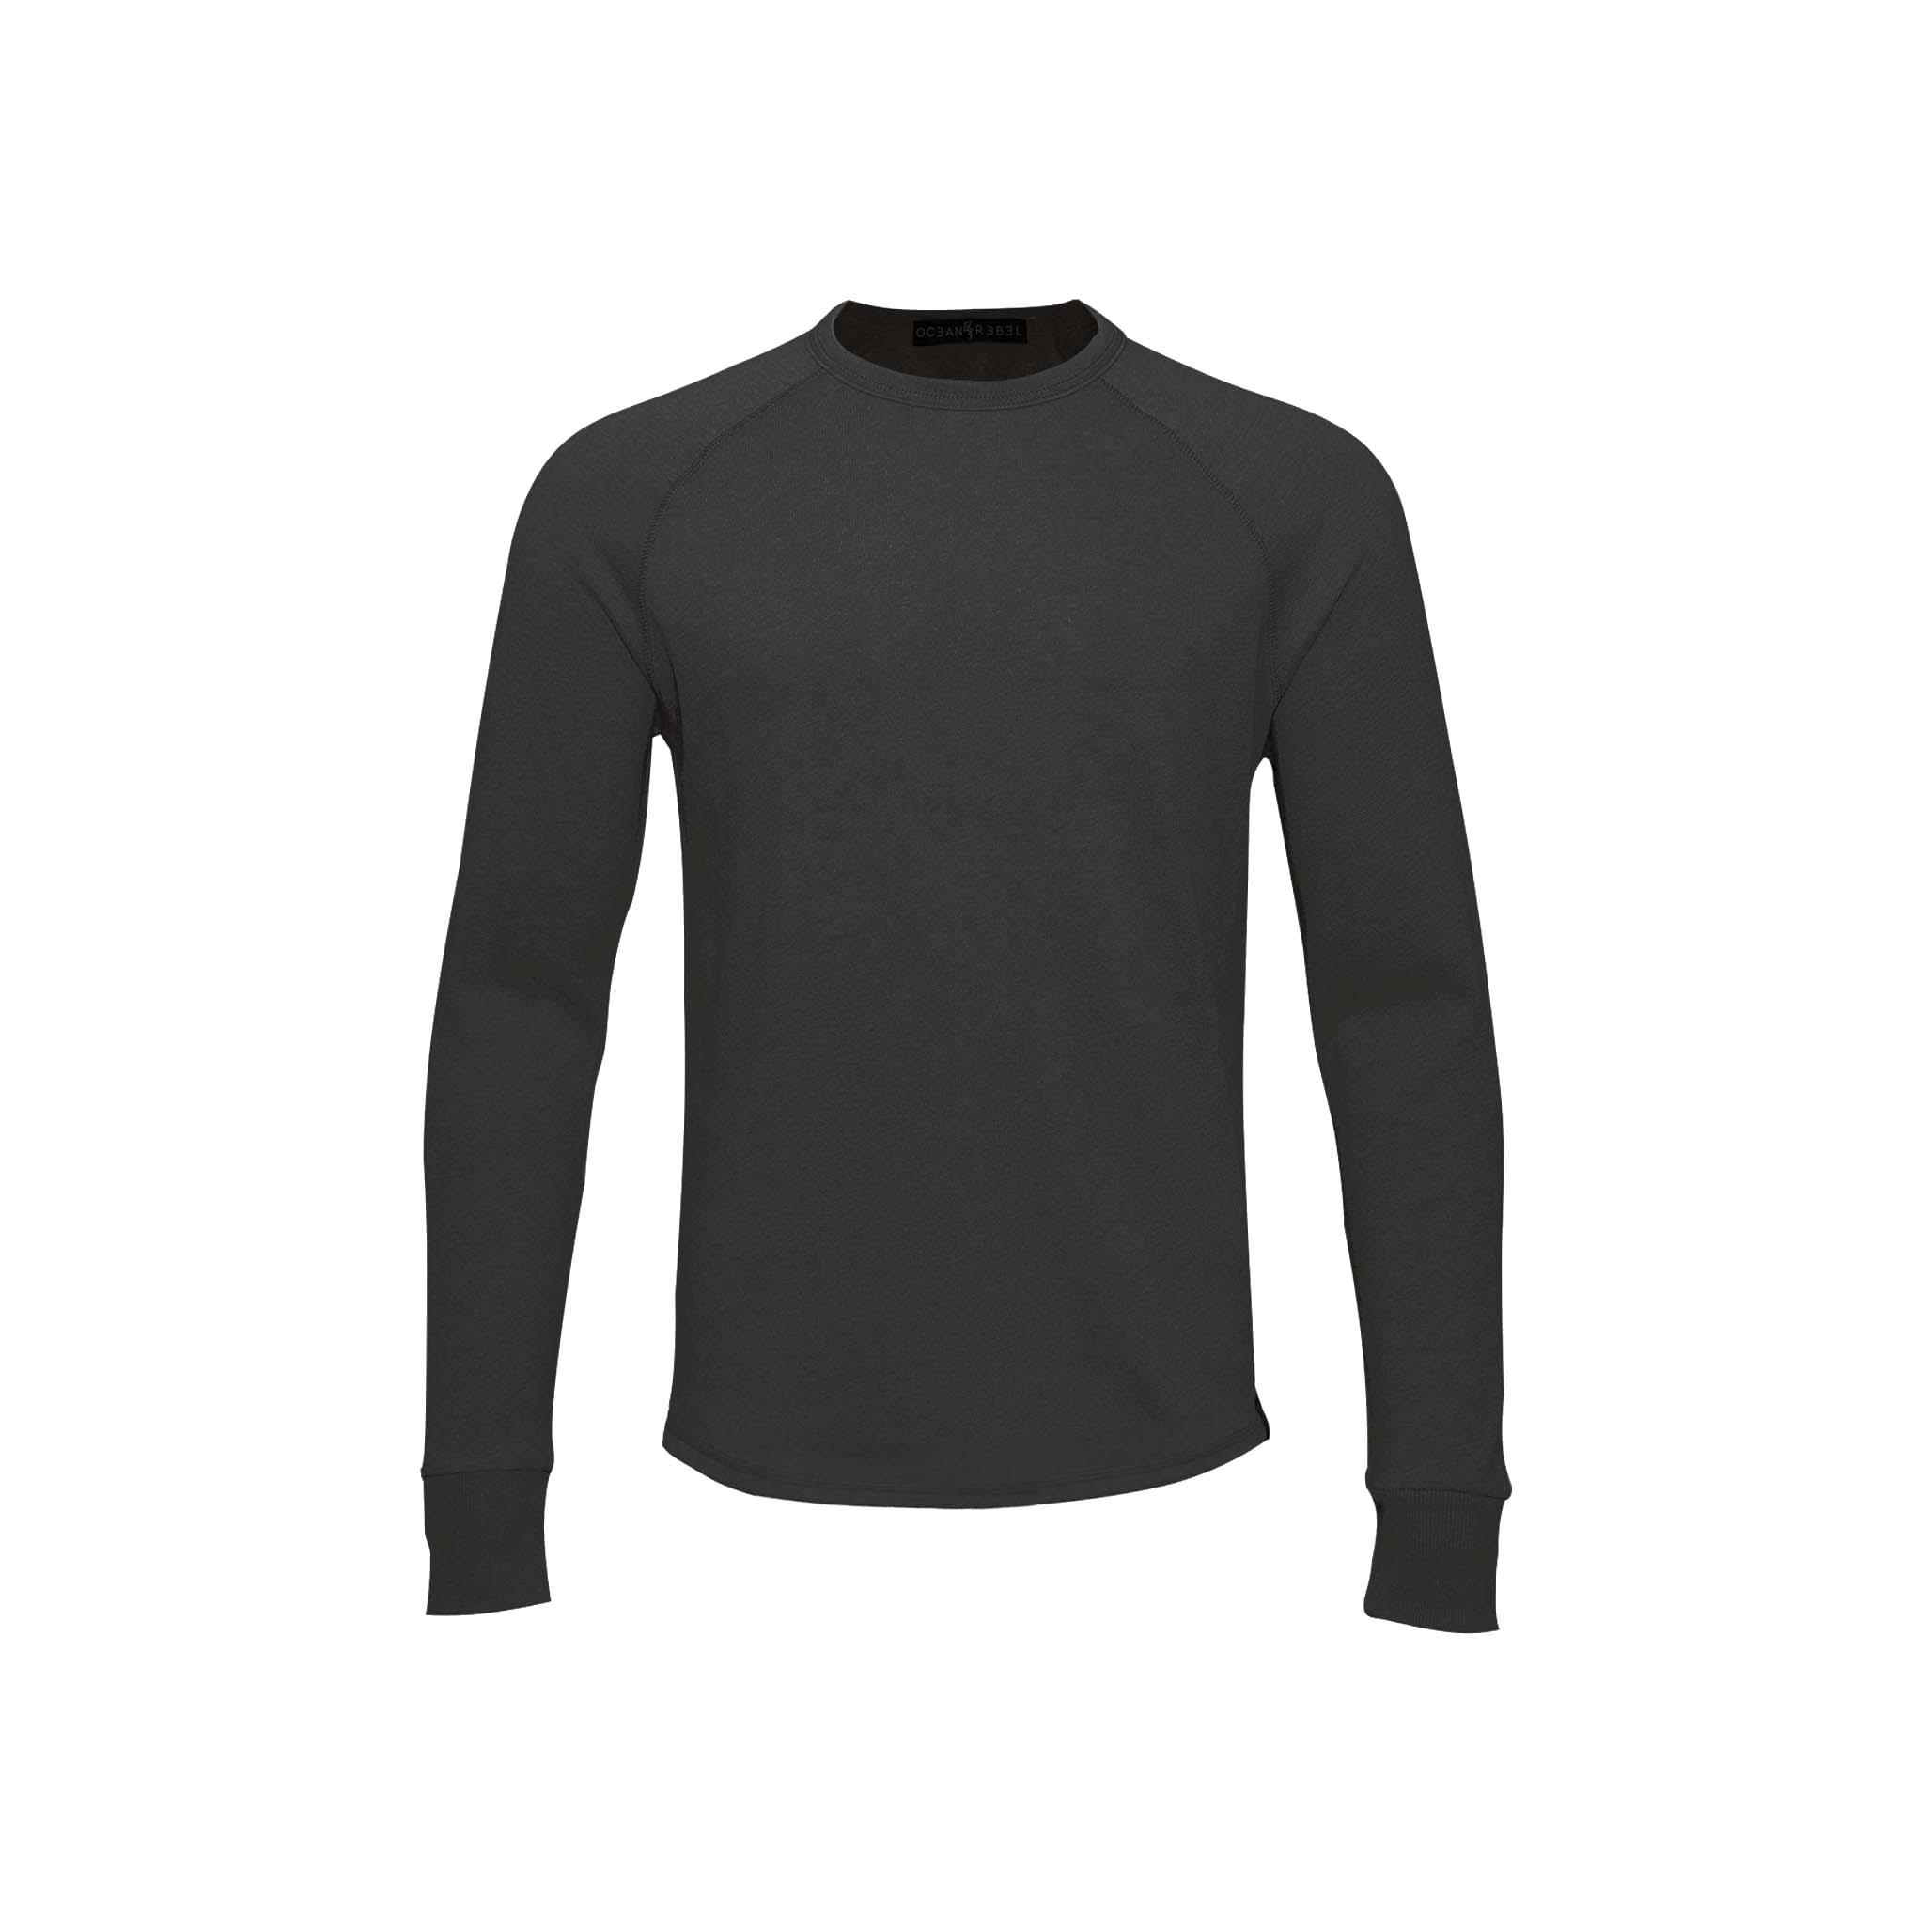 Premium Knit Sweatshirt - Smoke Black Small Ocean Rebel